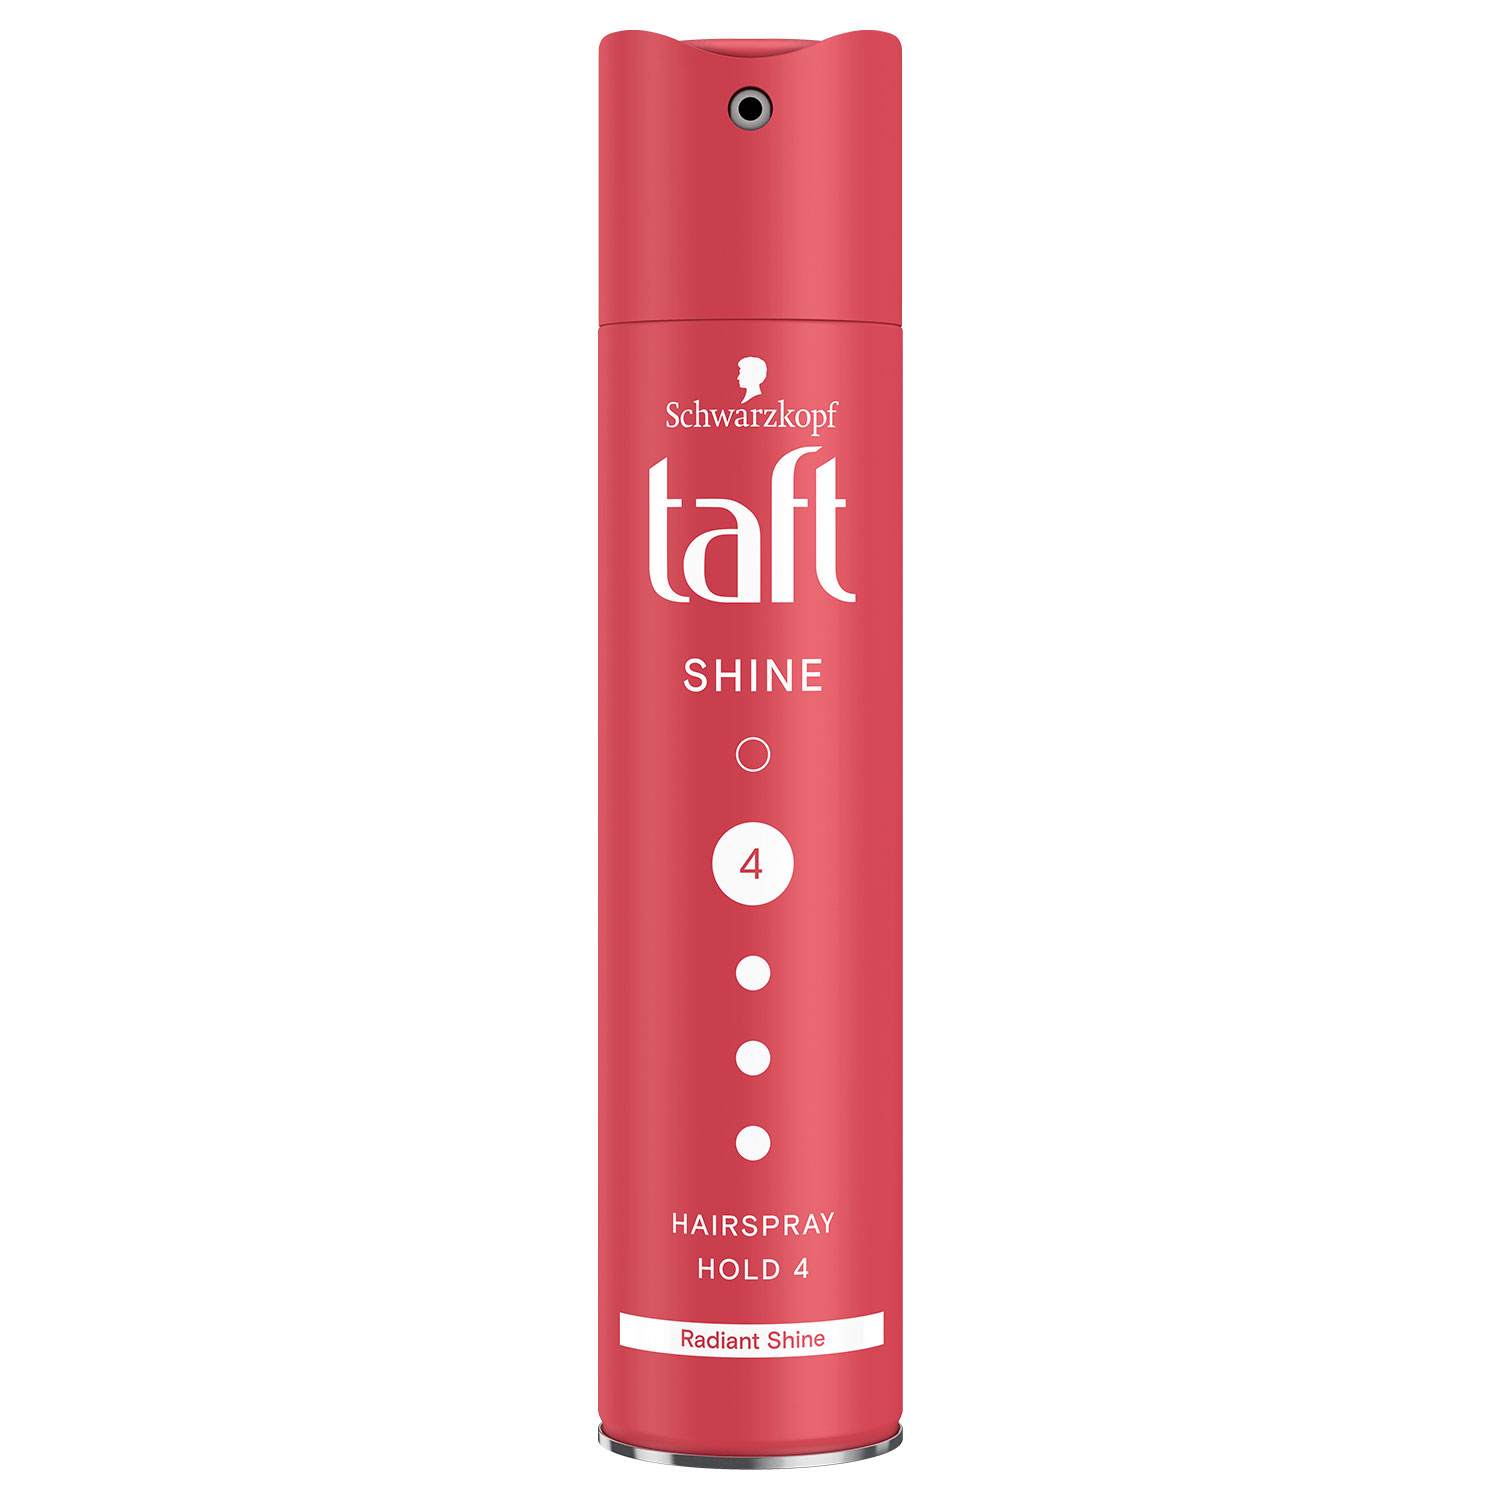 Hairspray Taft Shine of diamonds 4 250ml